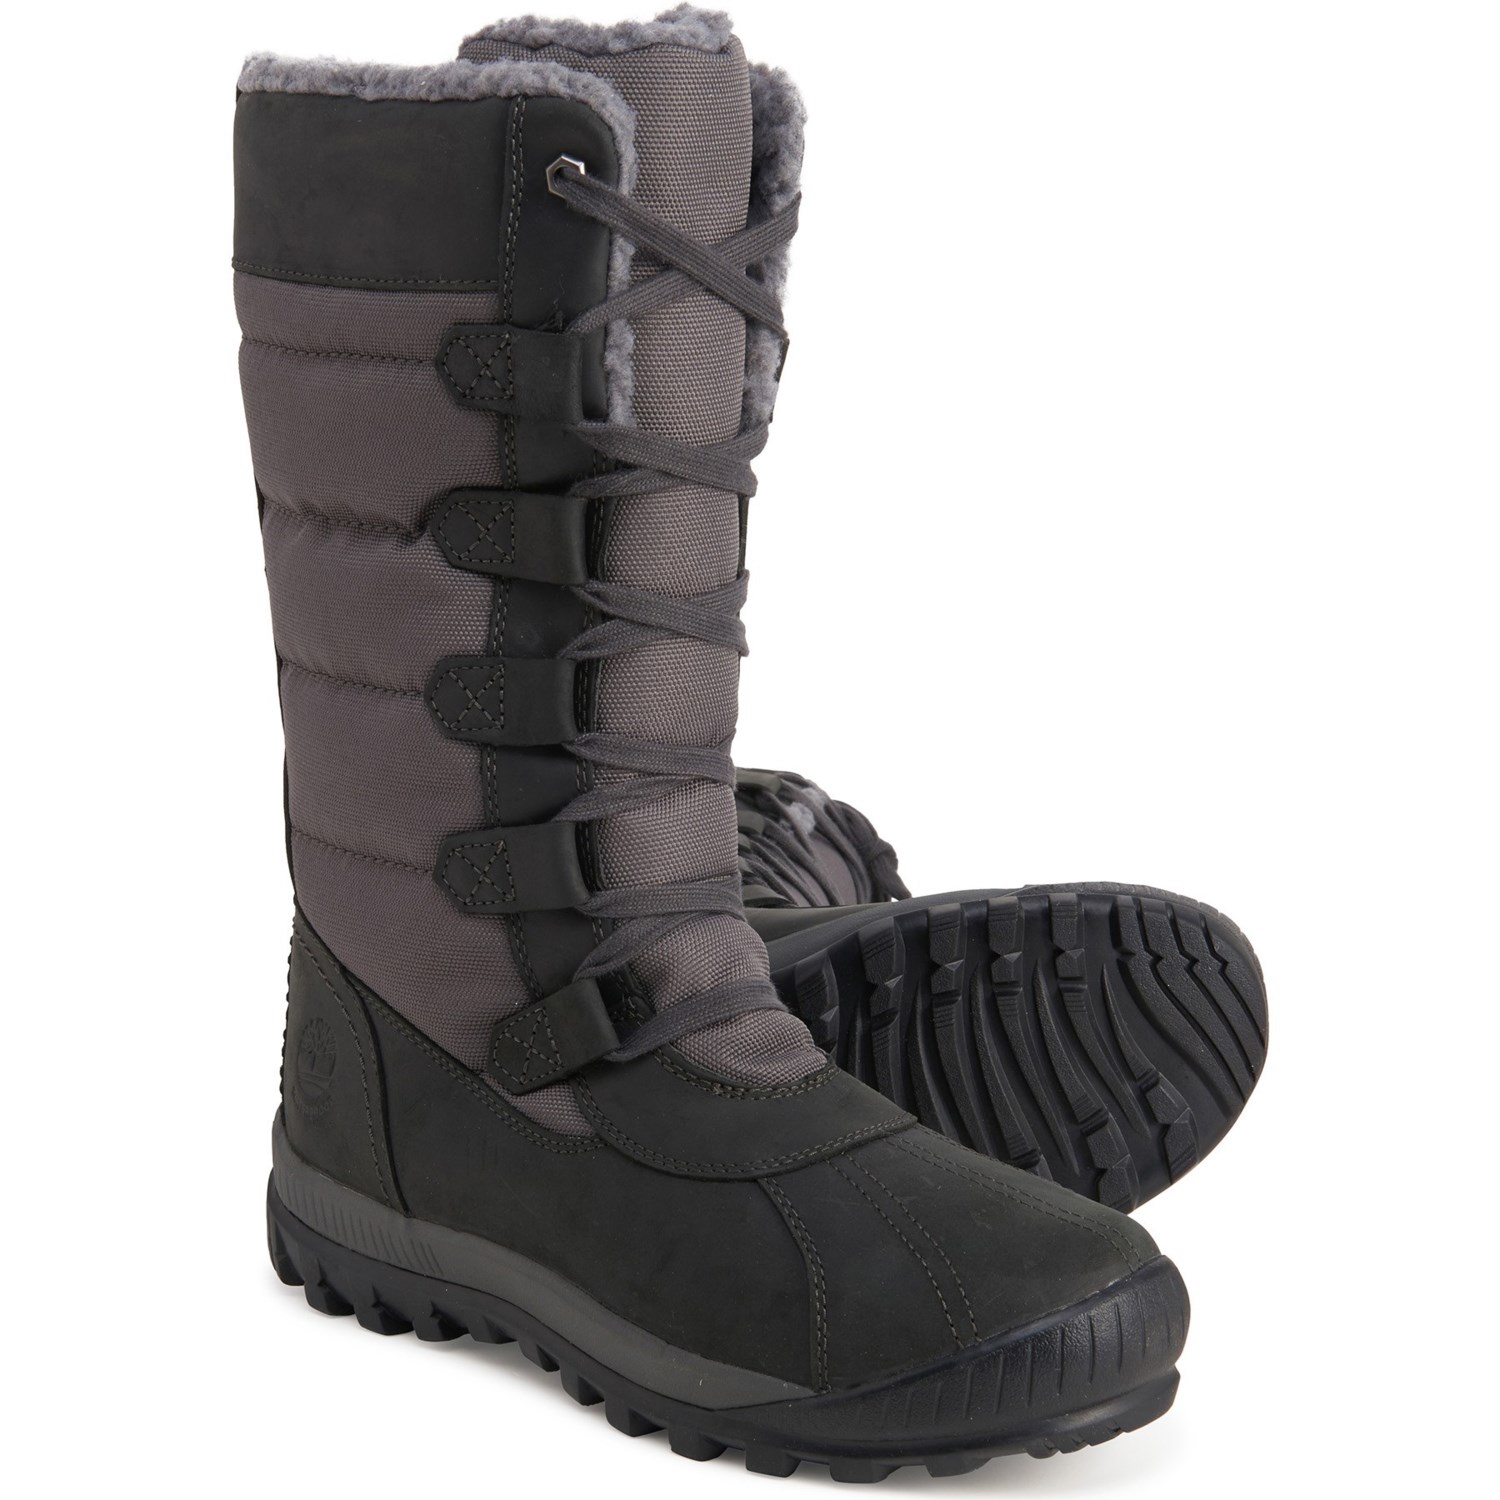 black winter timberland boots